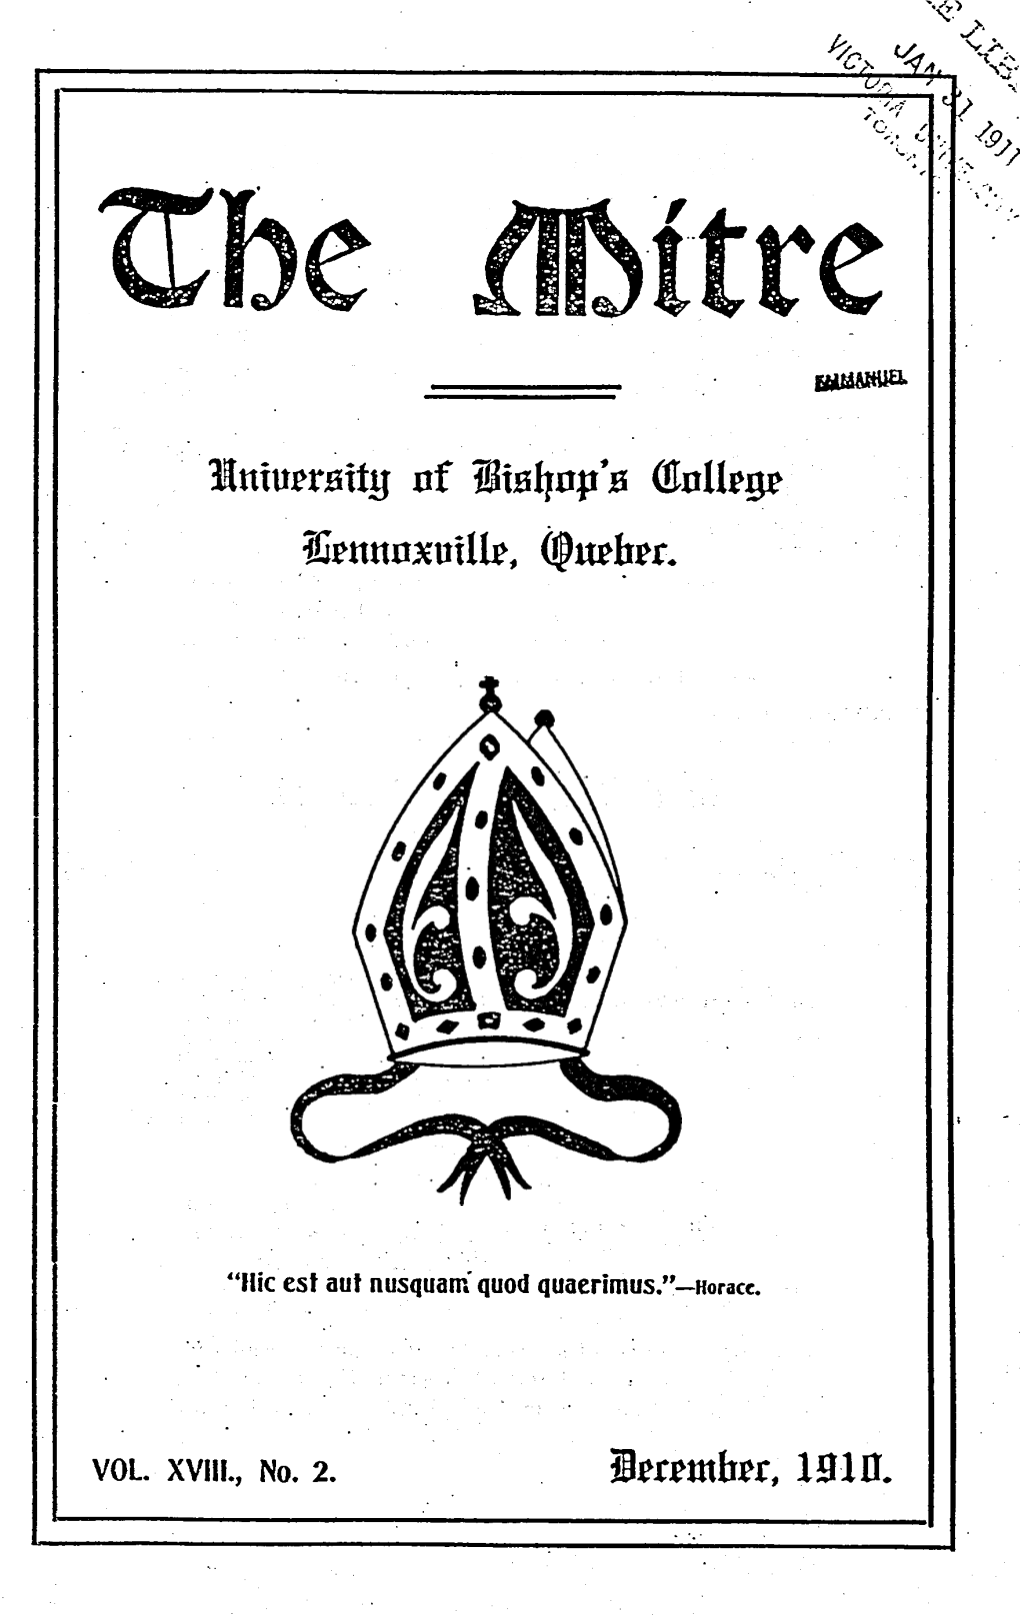 U N I V E R S I T Y O F Bishop's College Vol Xviii No. 2. December, 1910